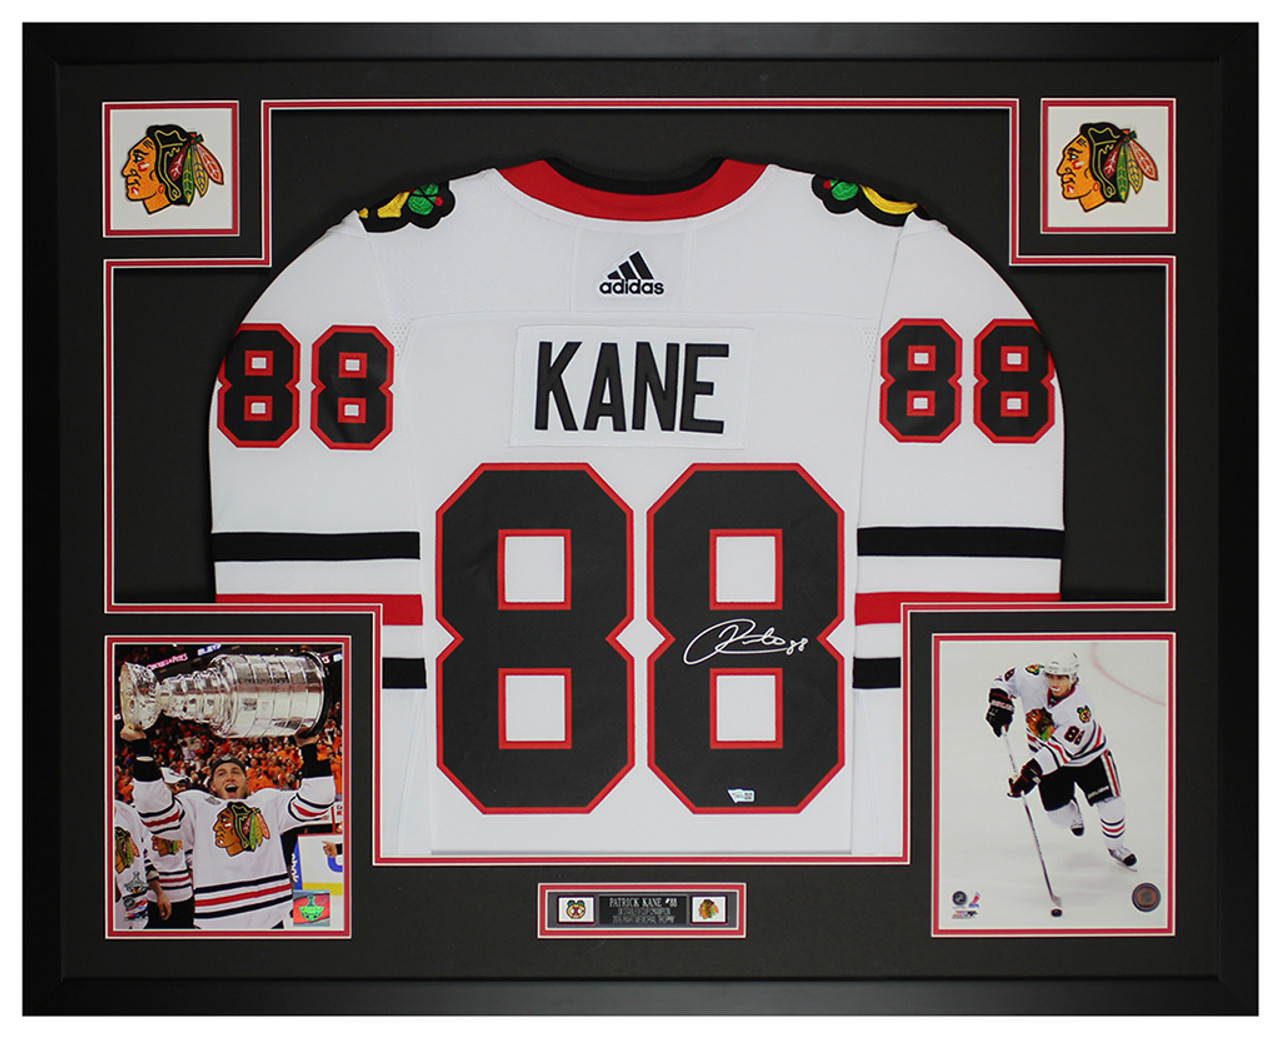 Patrick Kane Chicago Blackhawks Fanatics Authentic Autographed